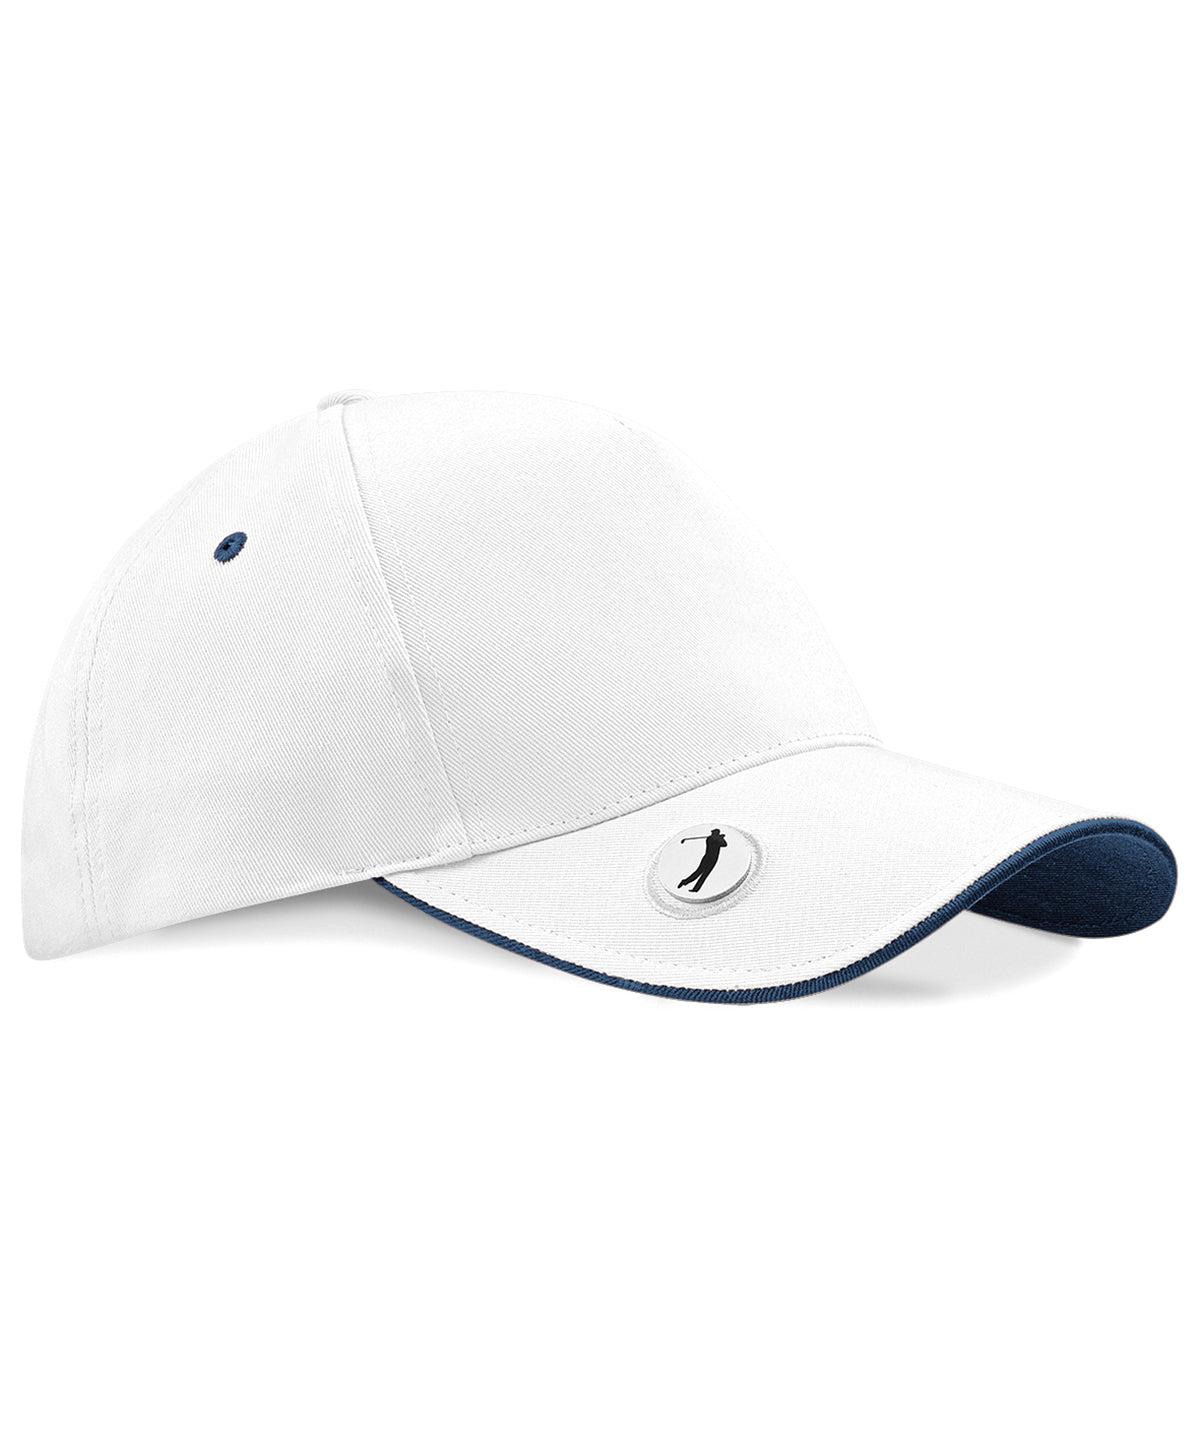 Beechfield Pro-style ball marker golf cap